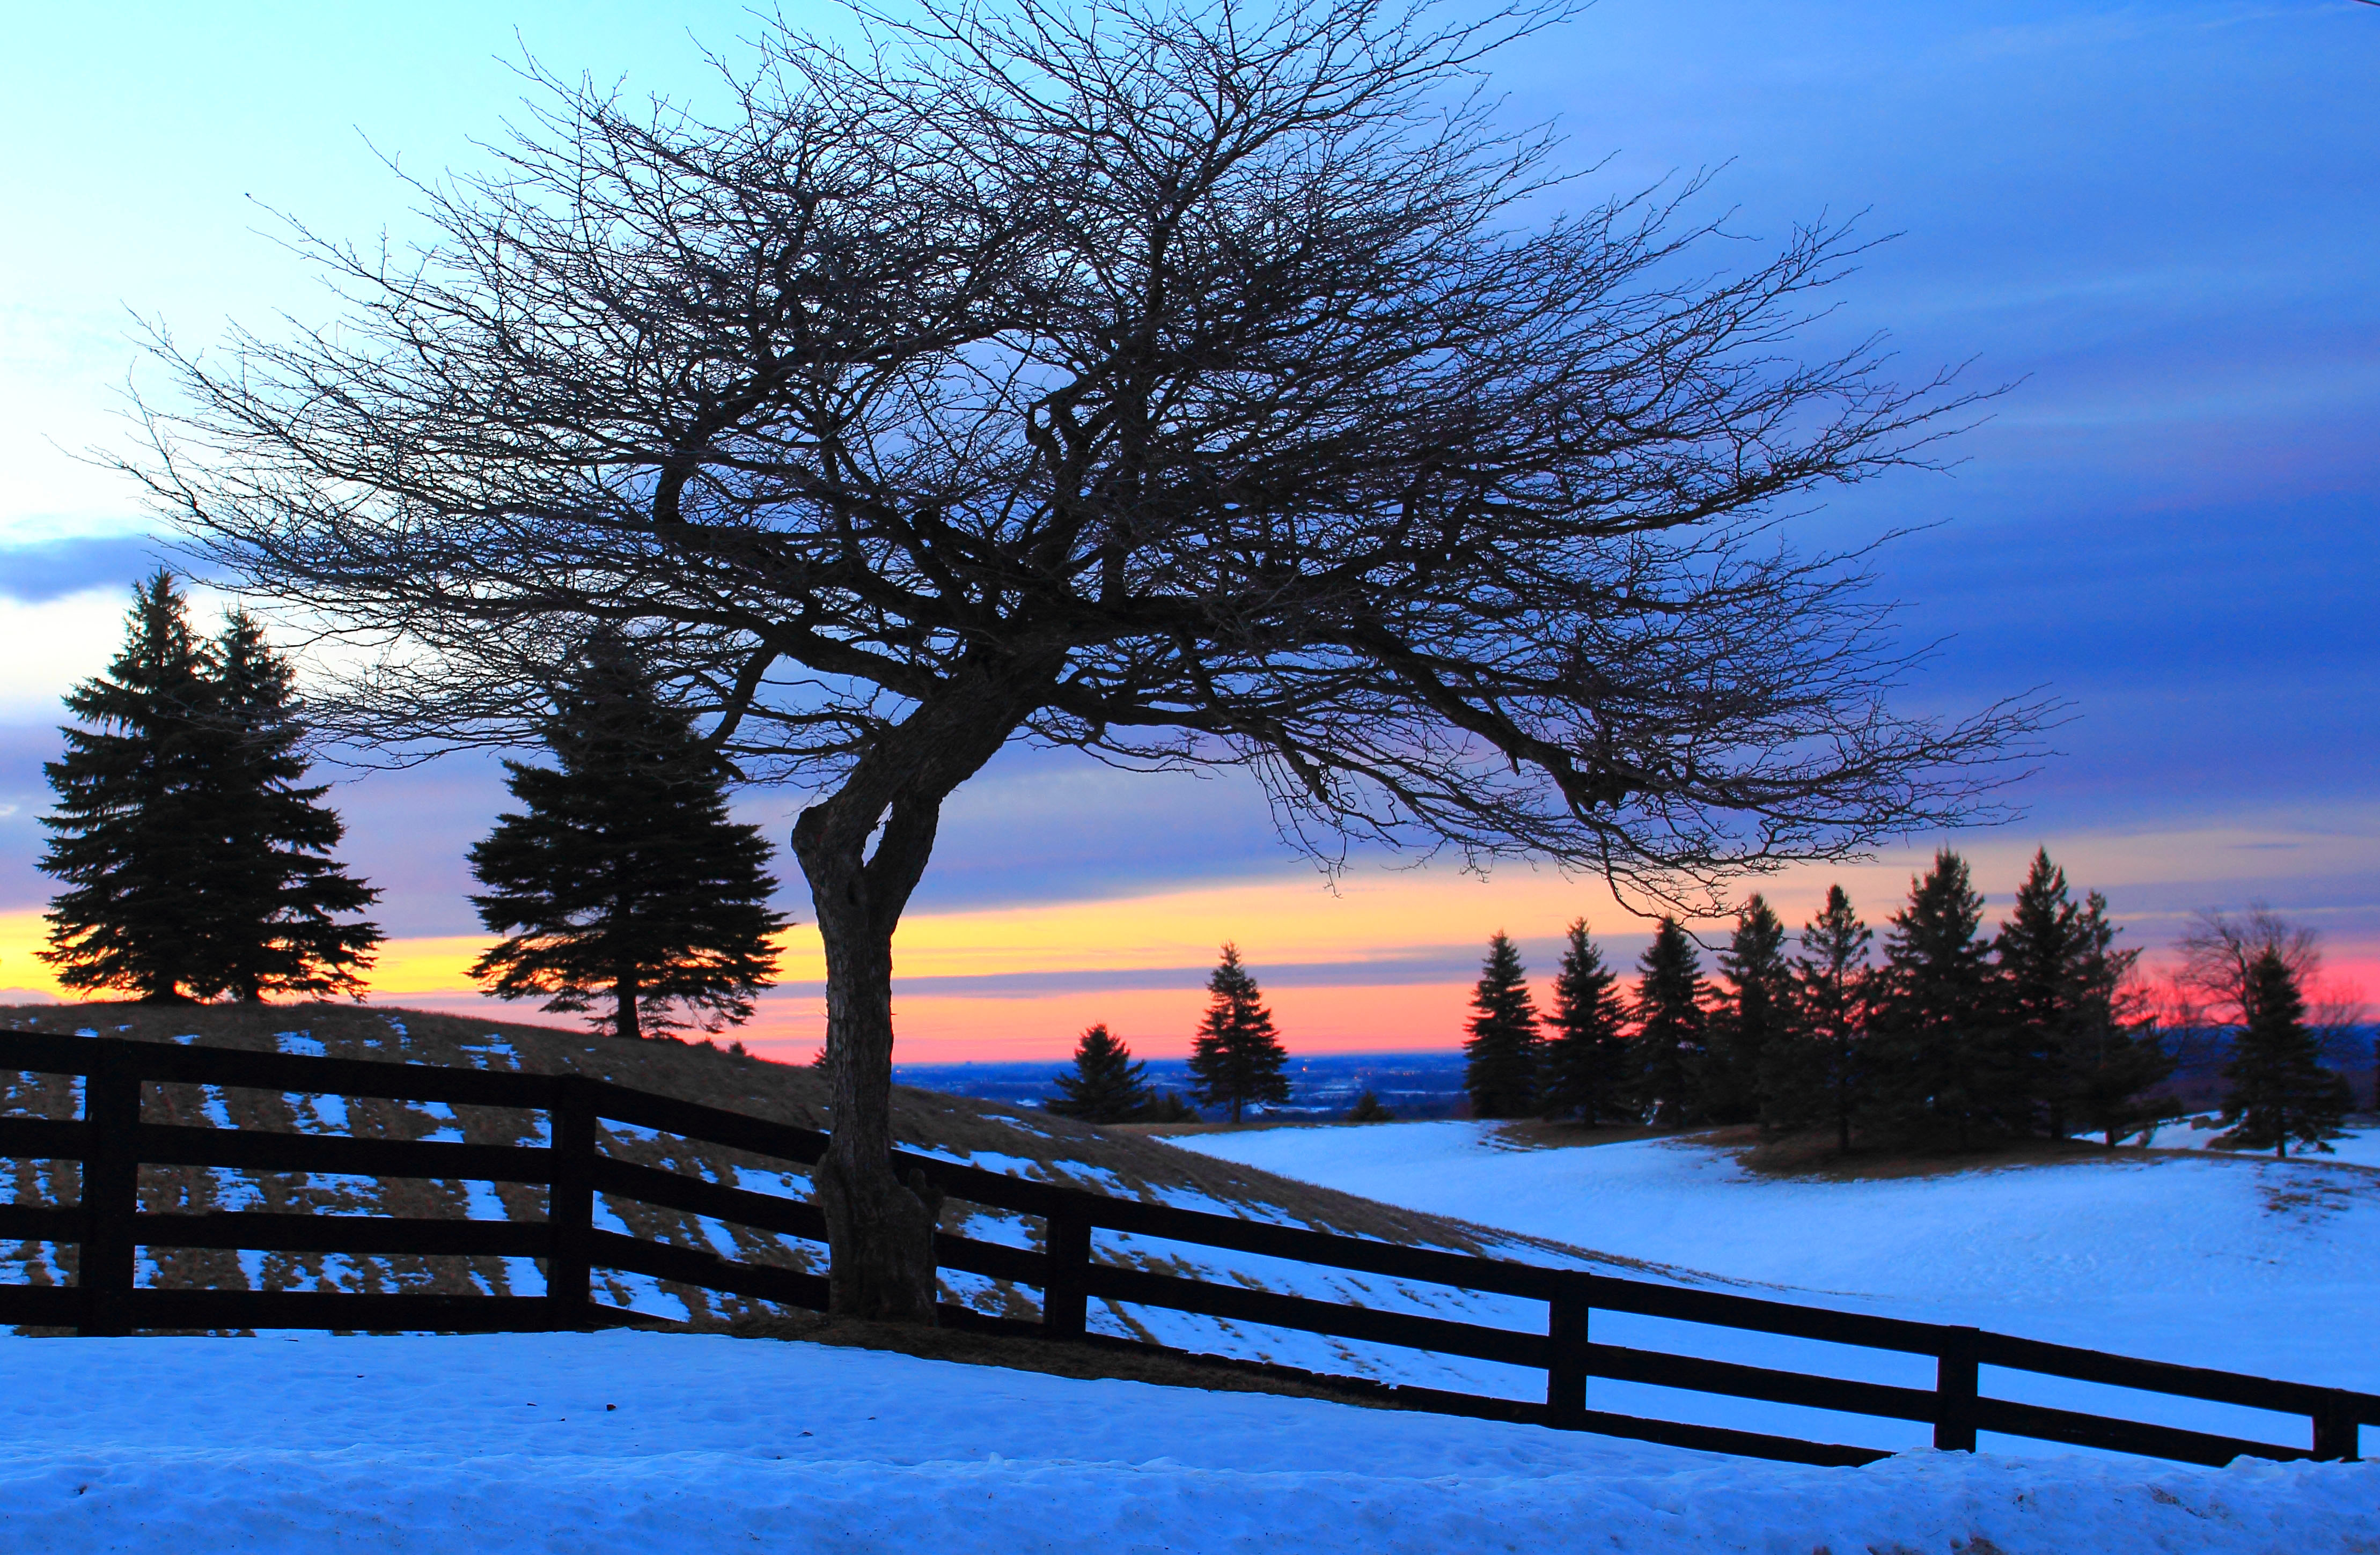 Wallpaper trees silhouettes winter snow hills sunlight dawn glow clouds outdoor farmland glowing x